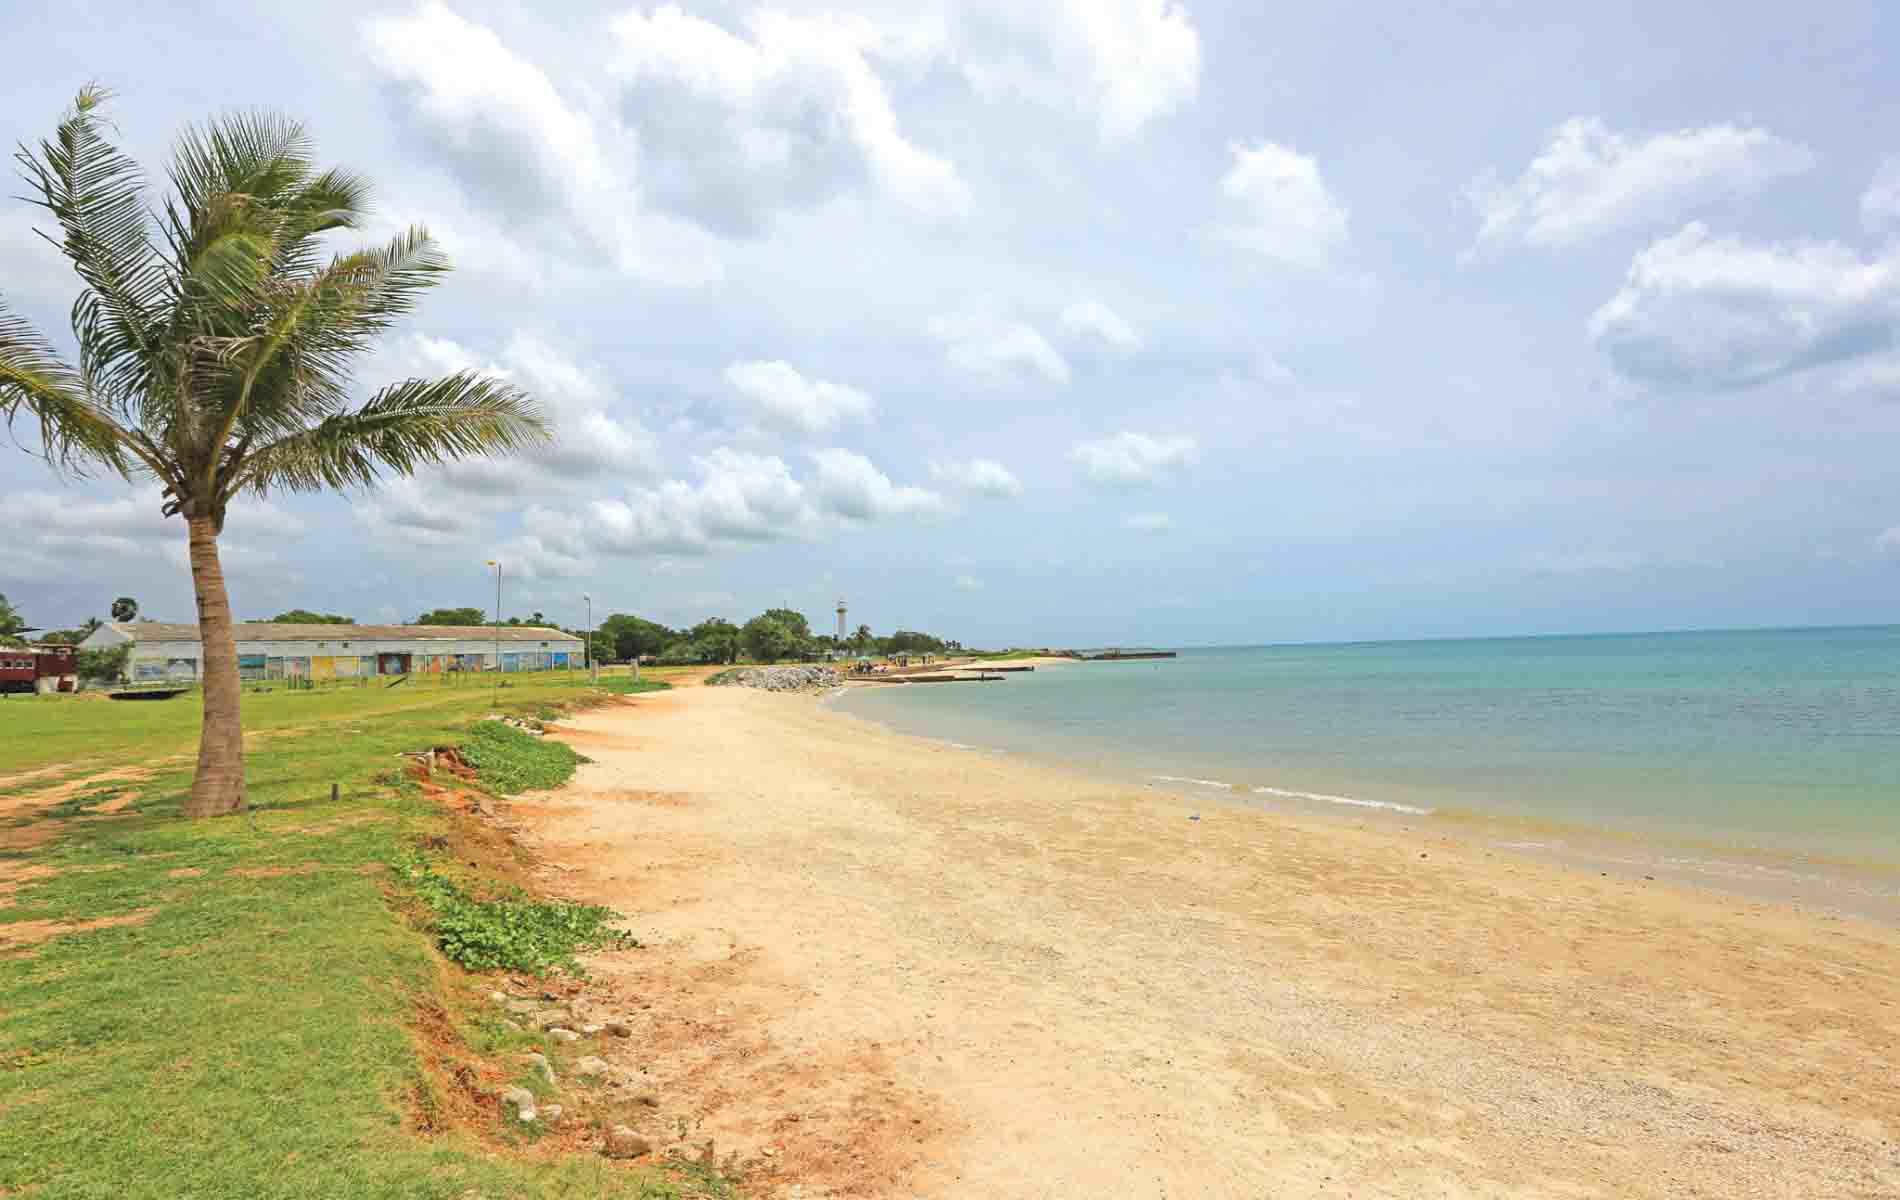 Jaffna beach in Sri Lanka